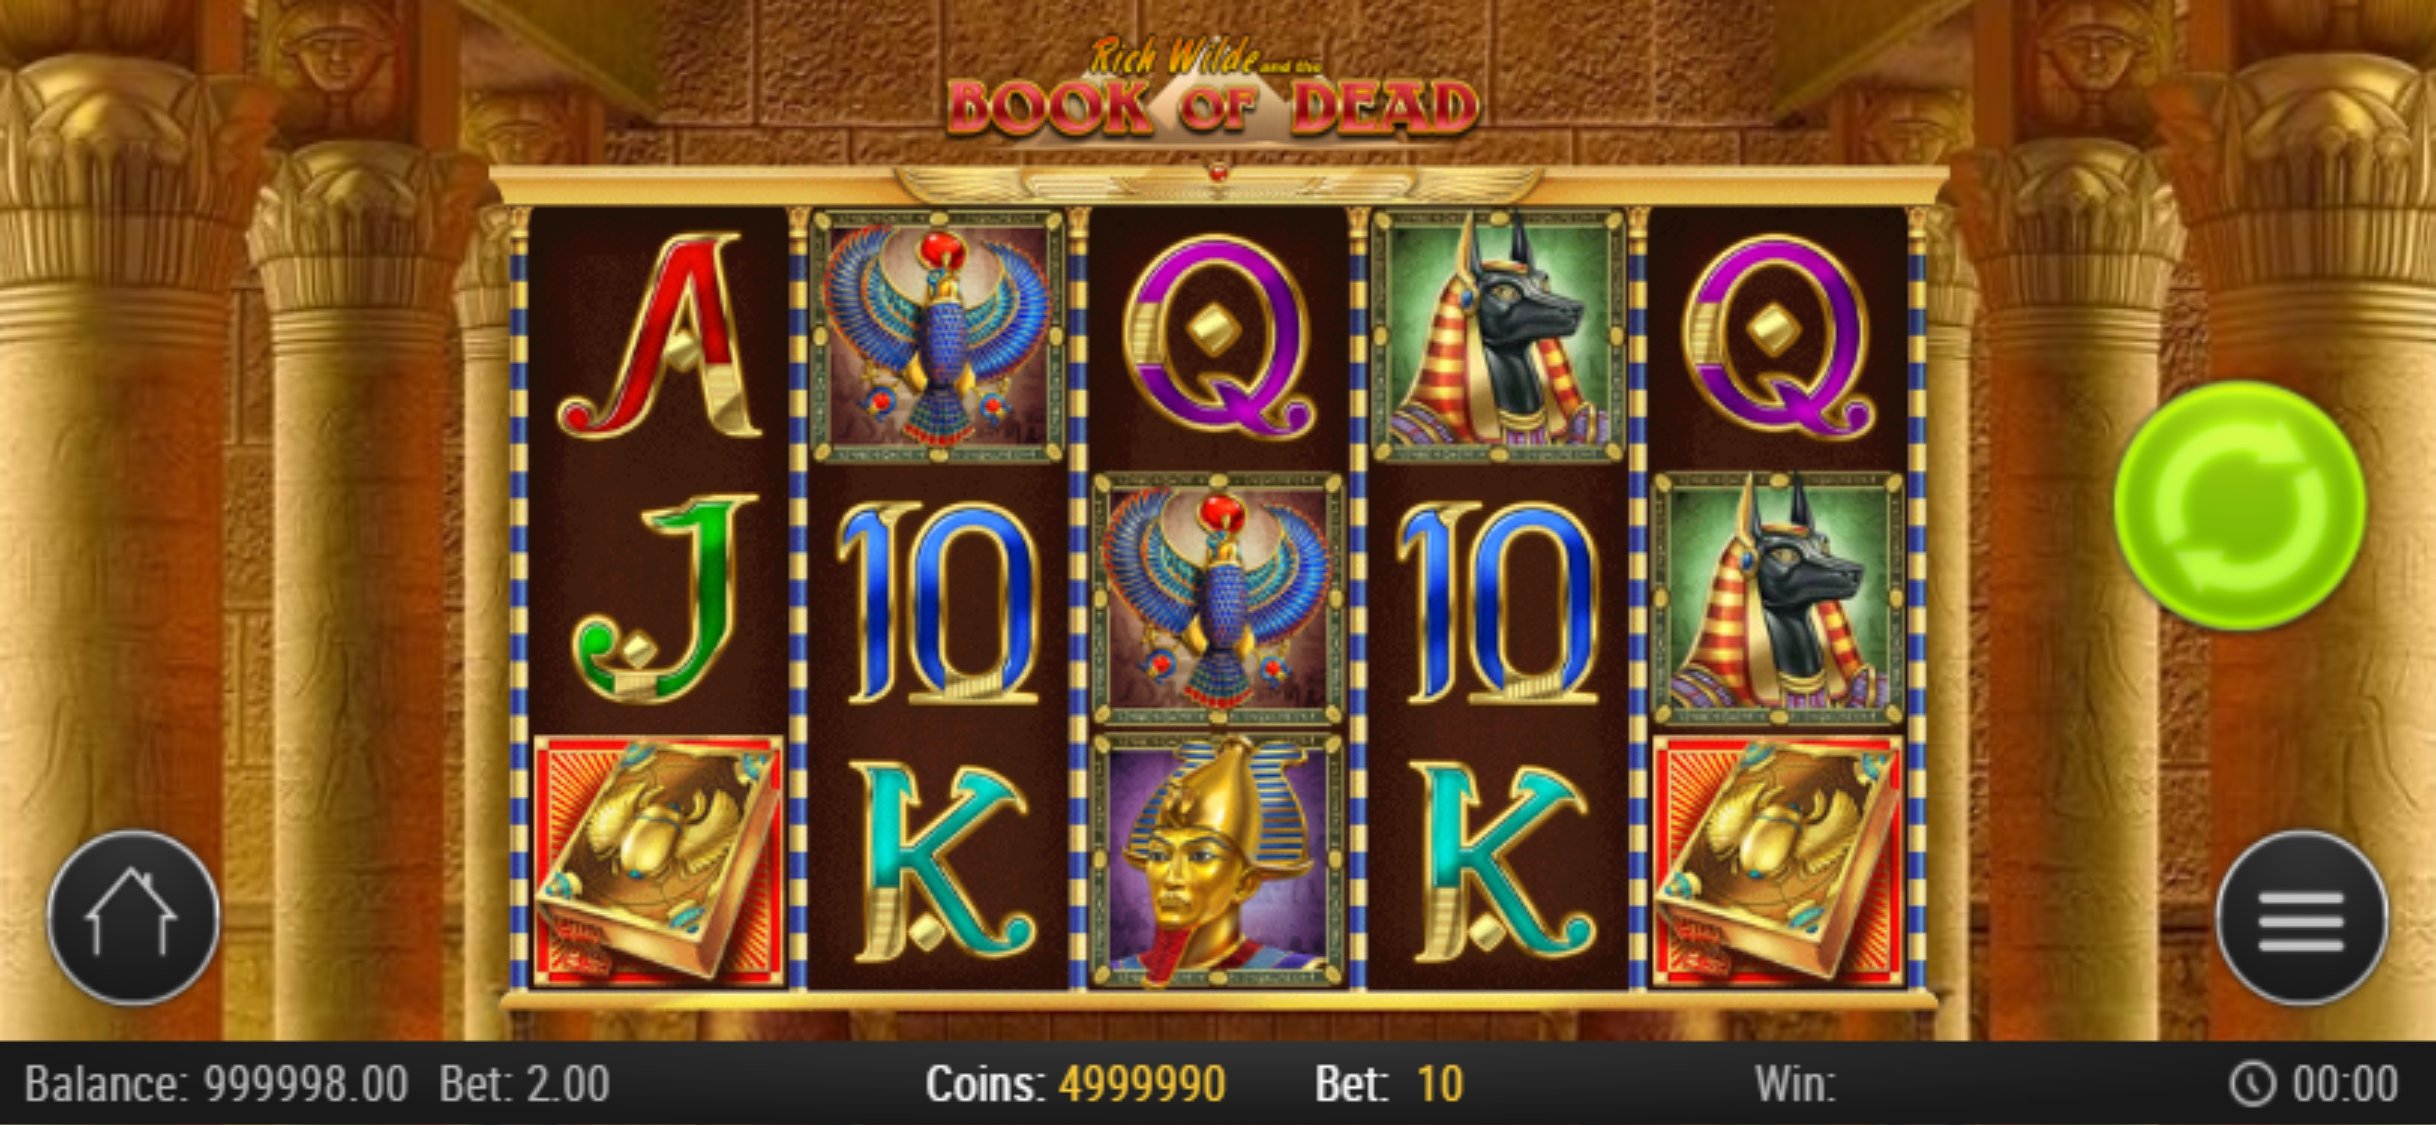 Netbet Casino Mobile Slot Games Review